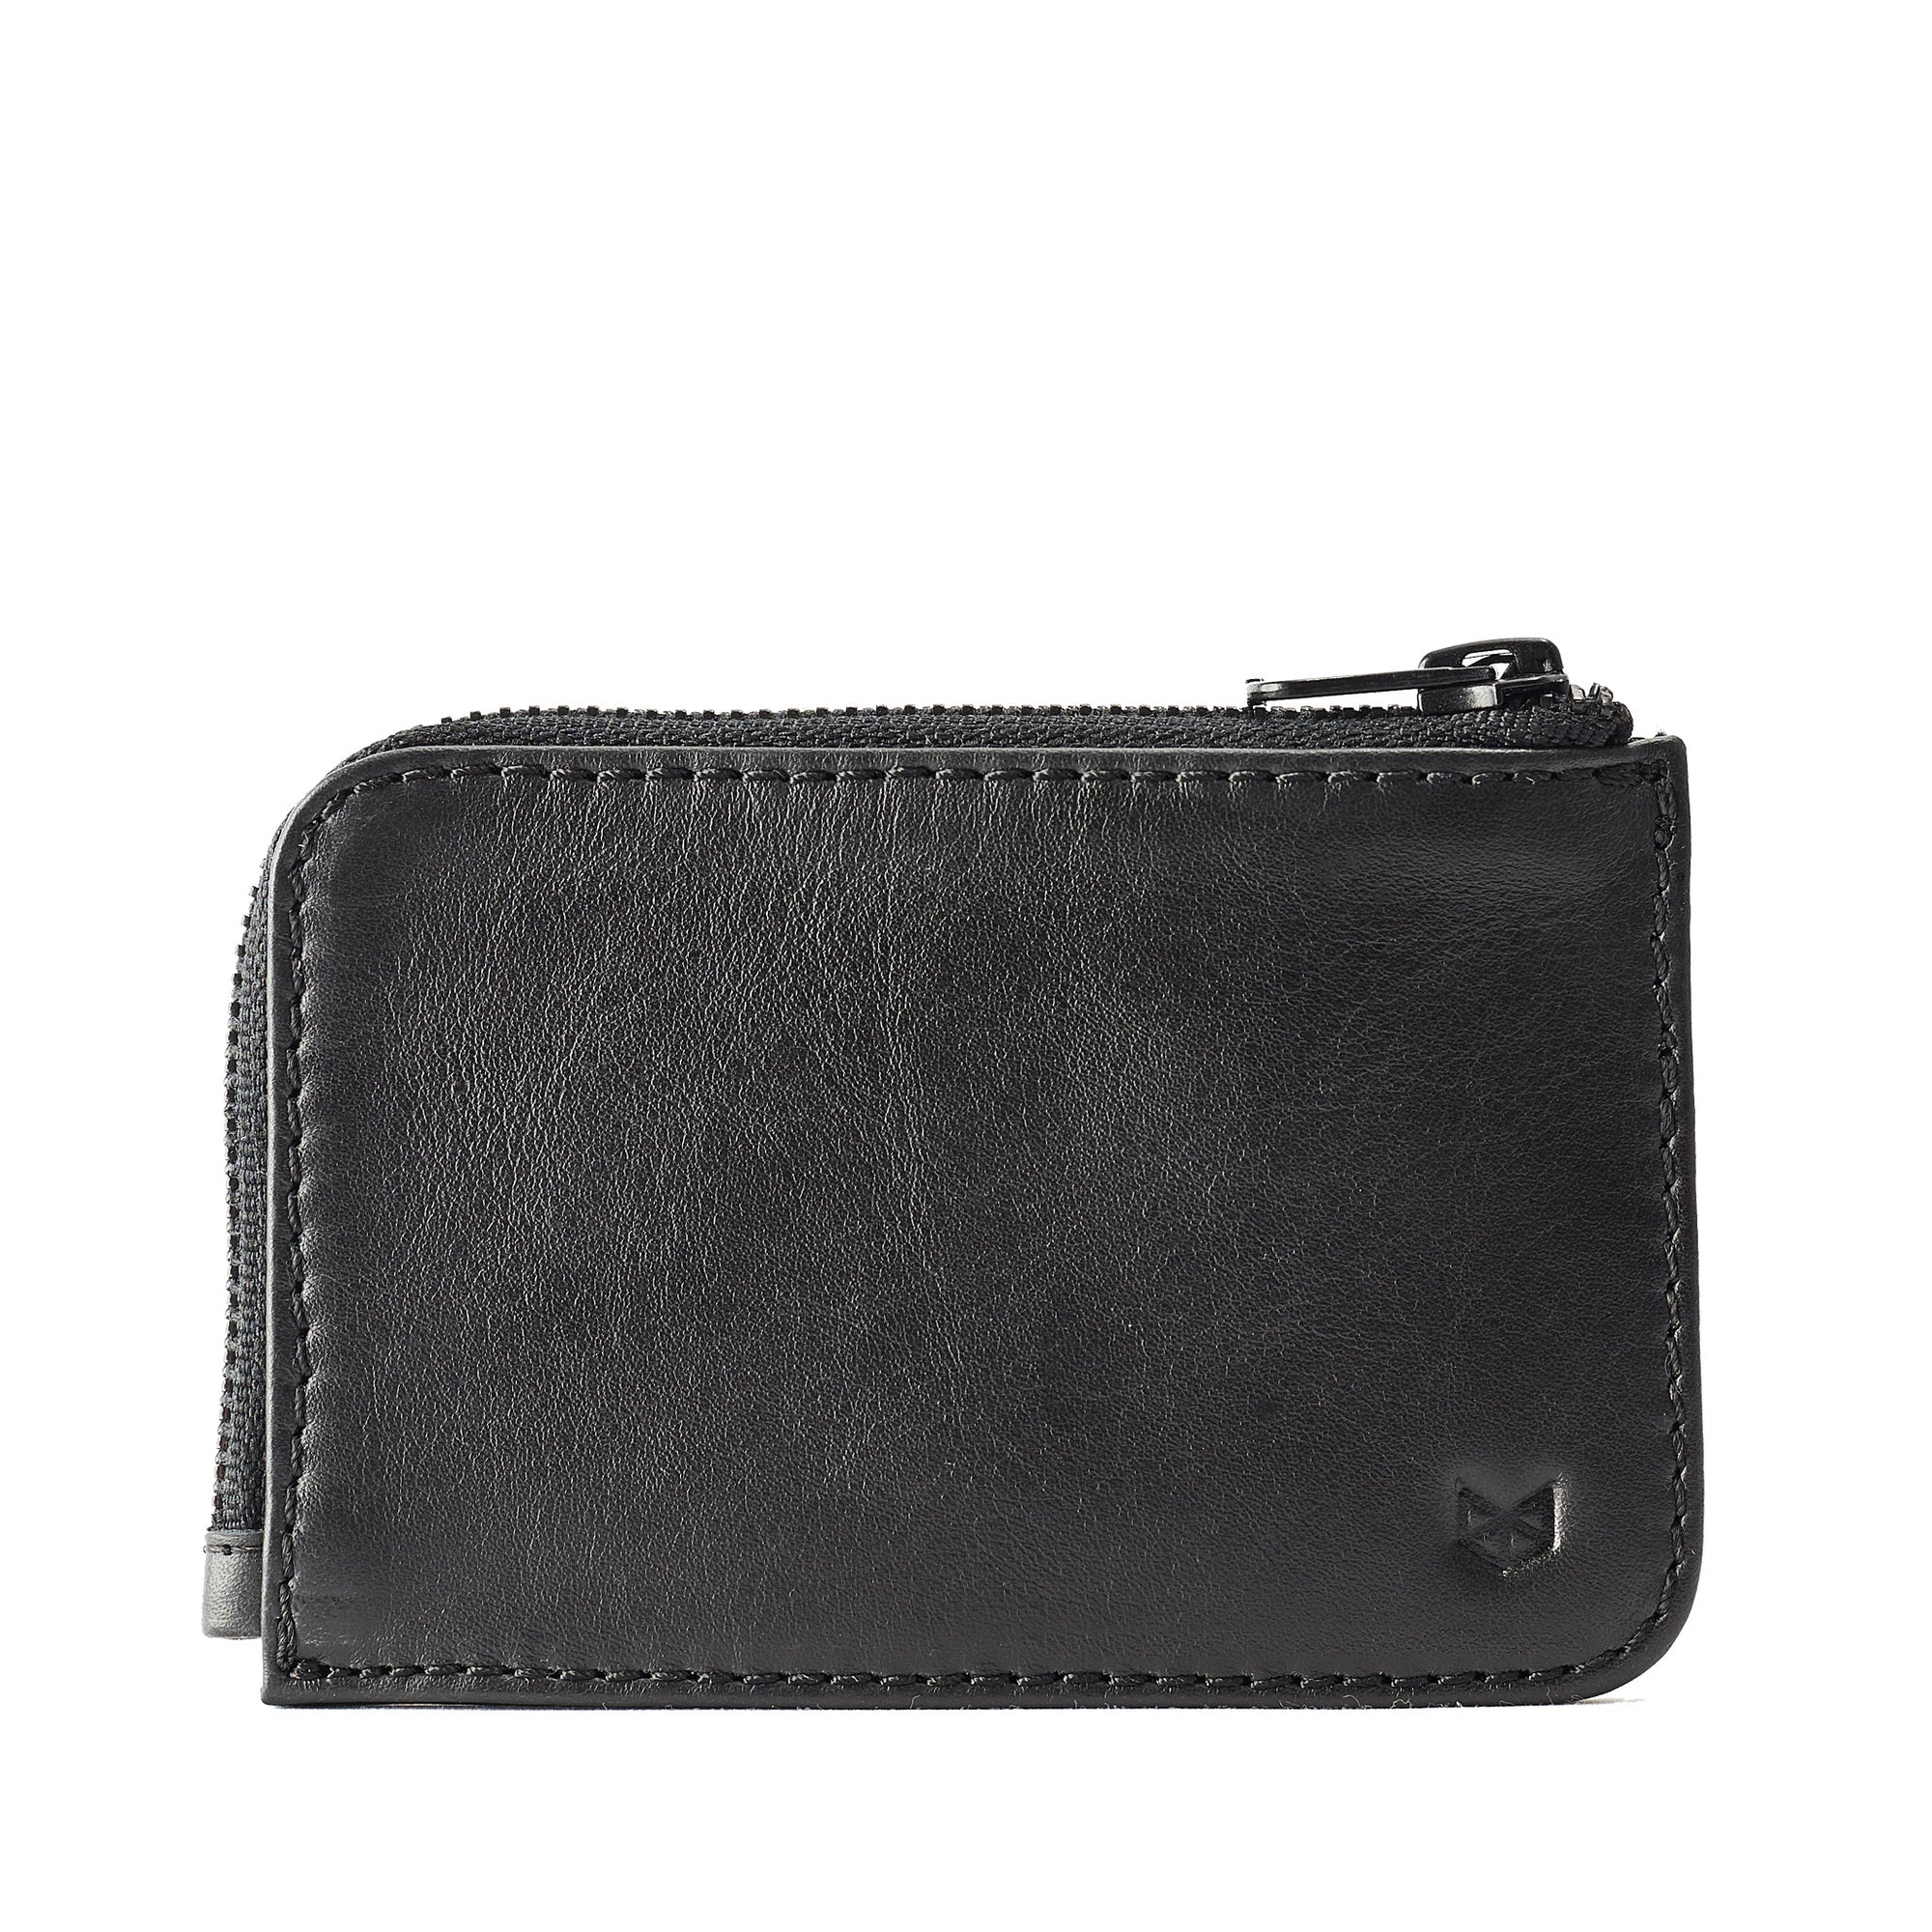 Cover. Black slim zip credit card holder, business card pouch, bills / coins minimalist pocket wallet, mens gift.